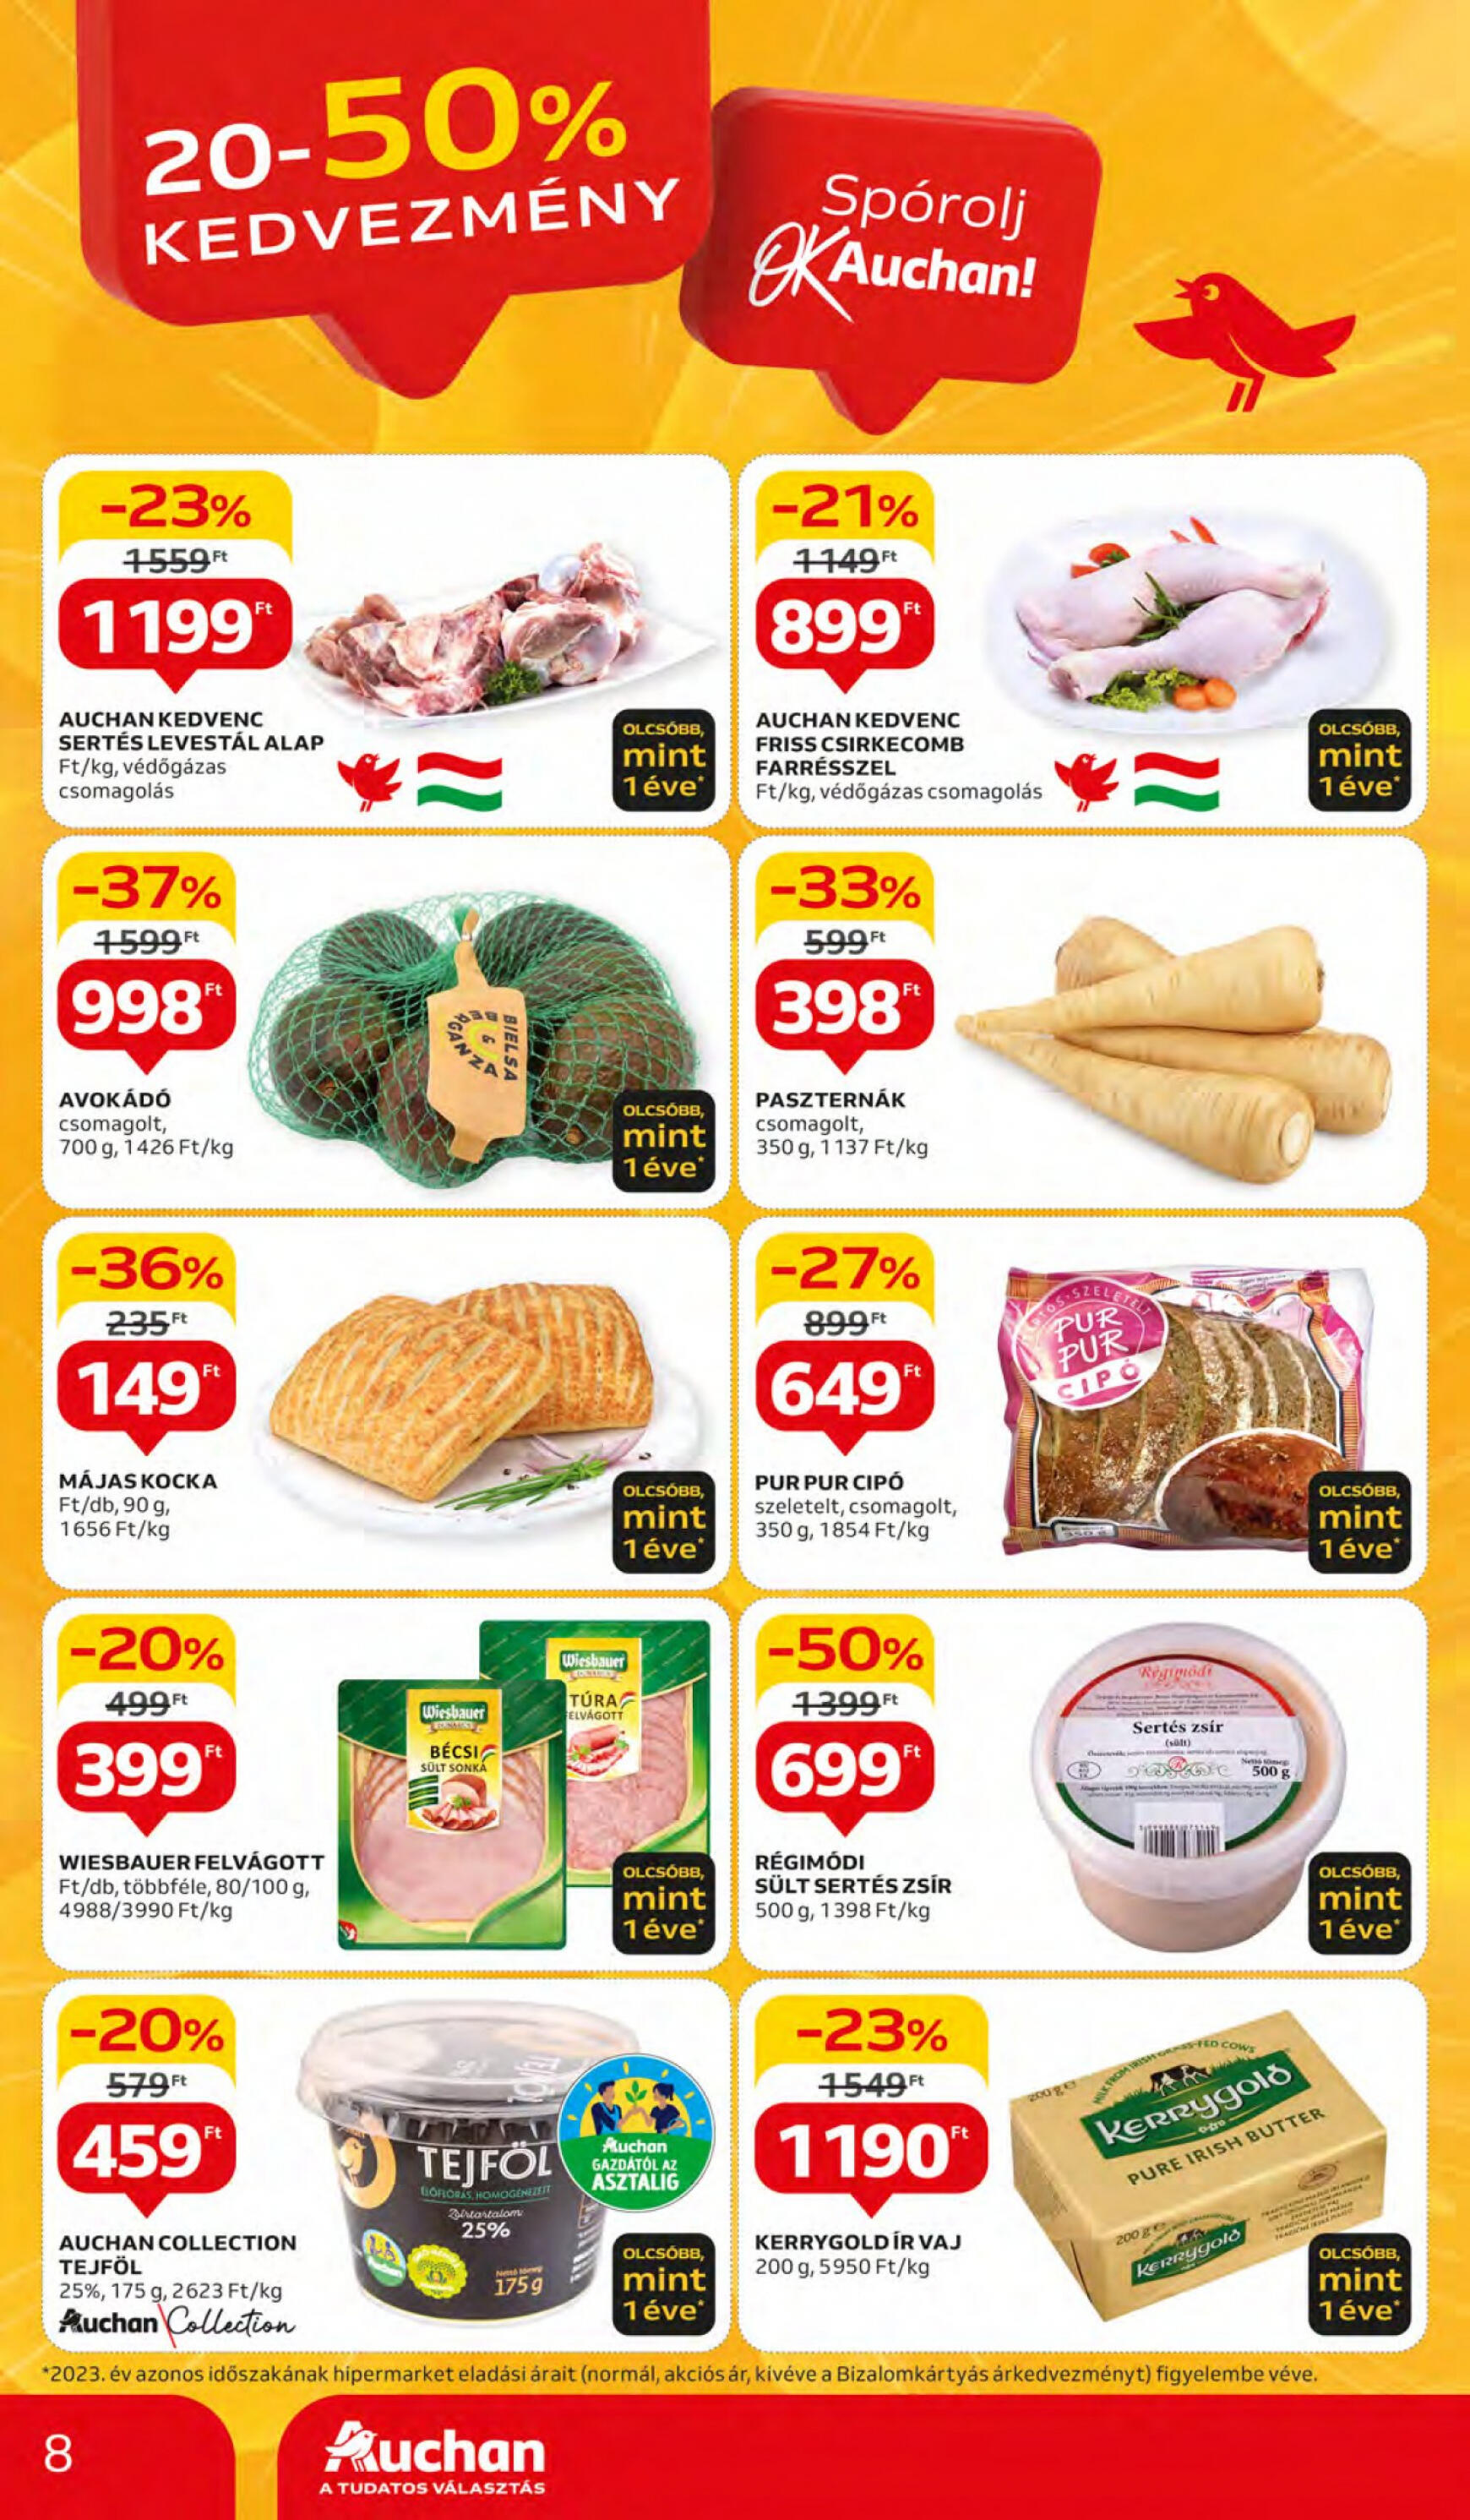 auchan - Aktuális újság Auchan 04.11. - 04.17. - page: 8